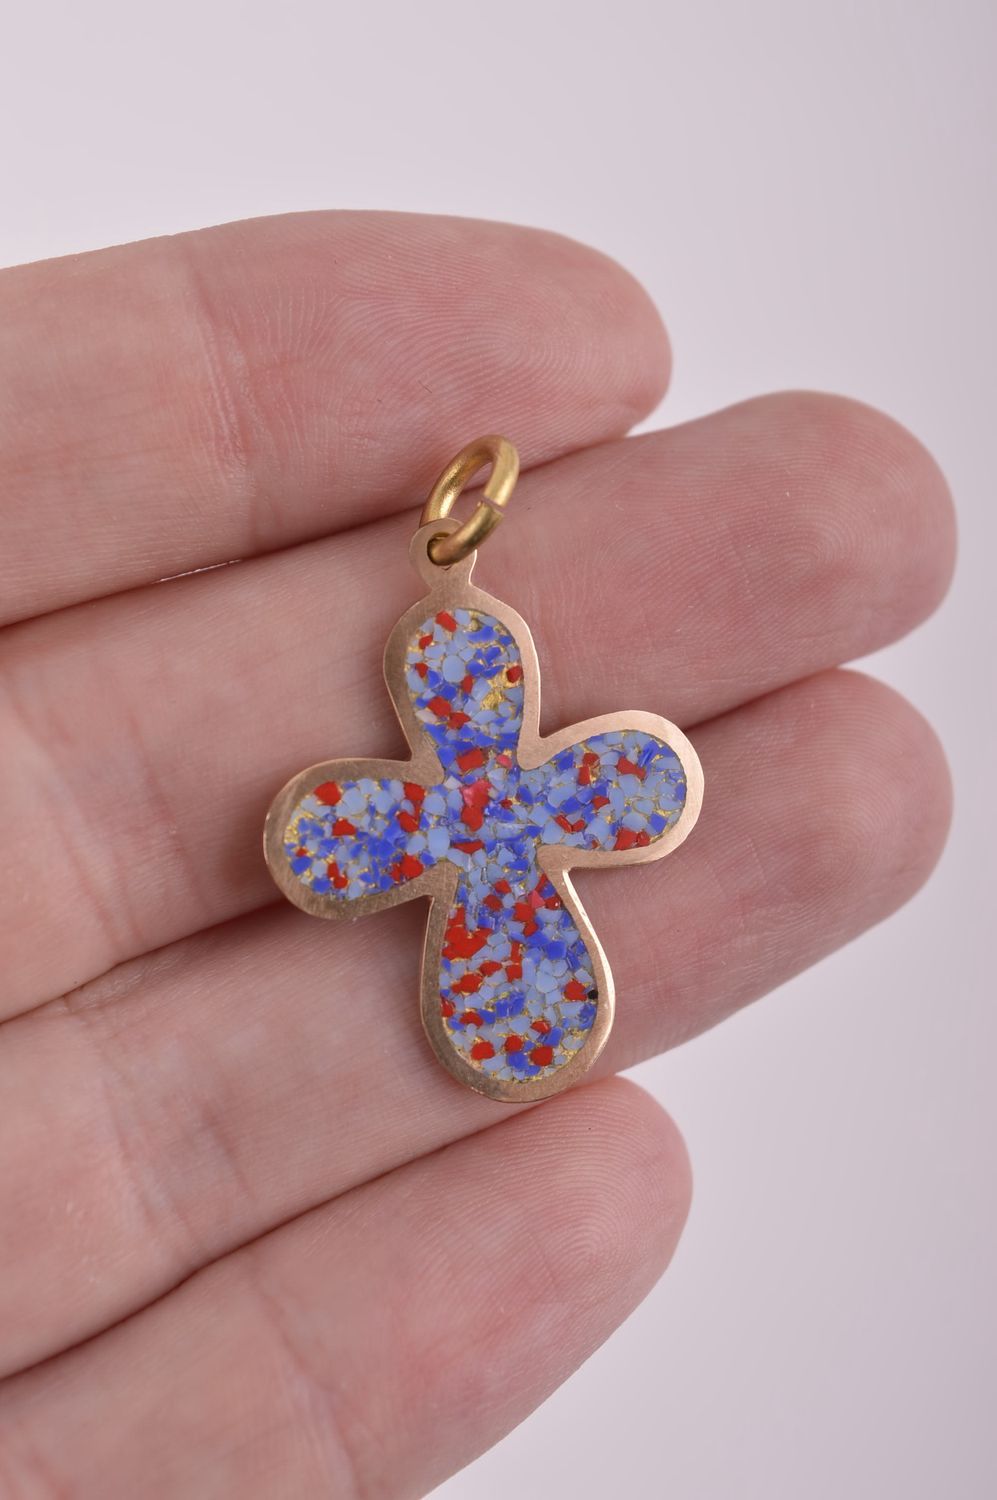 Unusual handmade cross pendant metal craft gemstone pendant jewelry designs photo 5